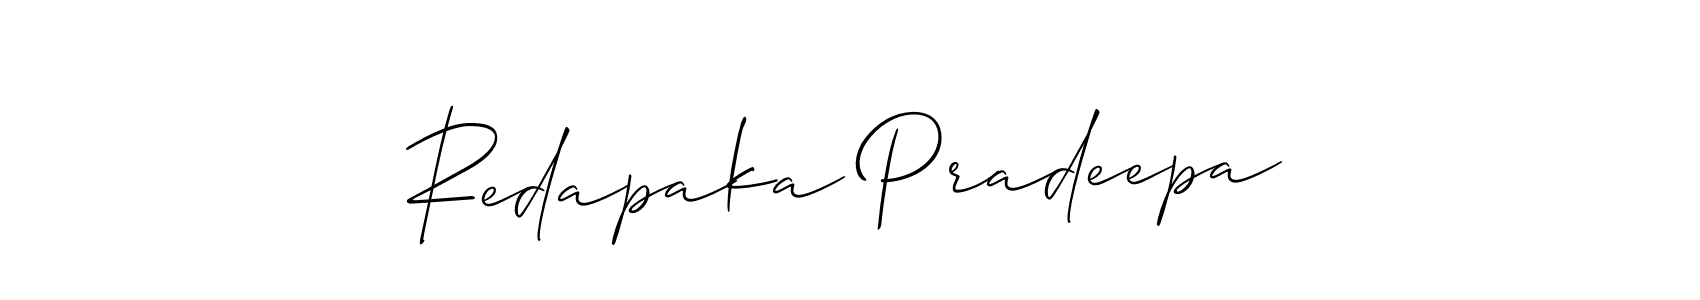 How to make Redapaka Pradeepa signature? Allison_Script is a professional autograph style. Create handwritten signature for Redapaka Pradeepa name. Redapaka Pradeepa signature style 2 images and pictures png